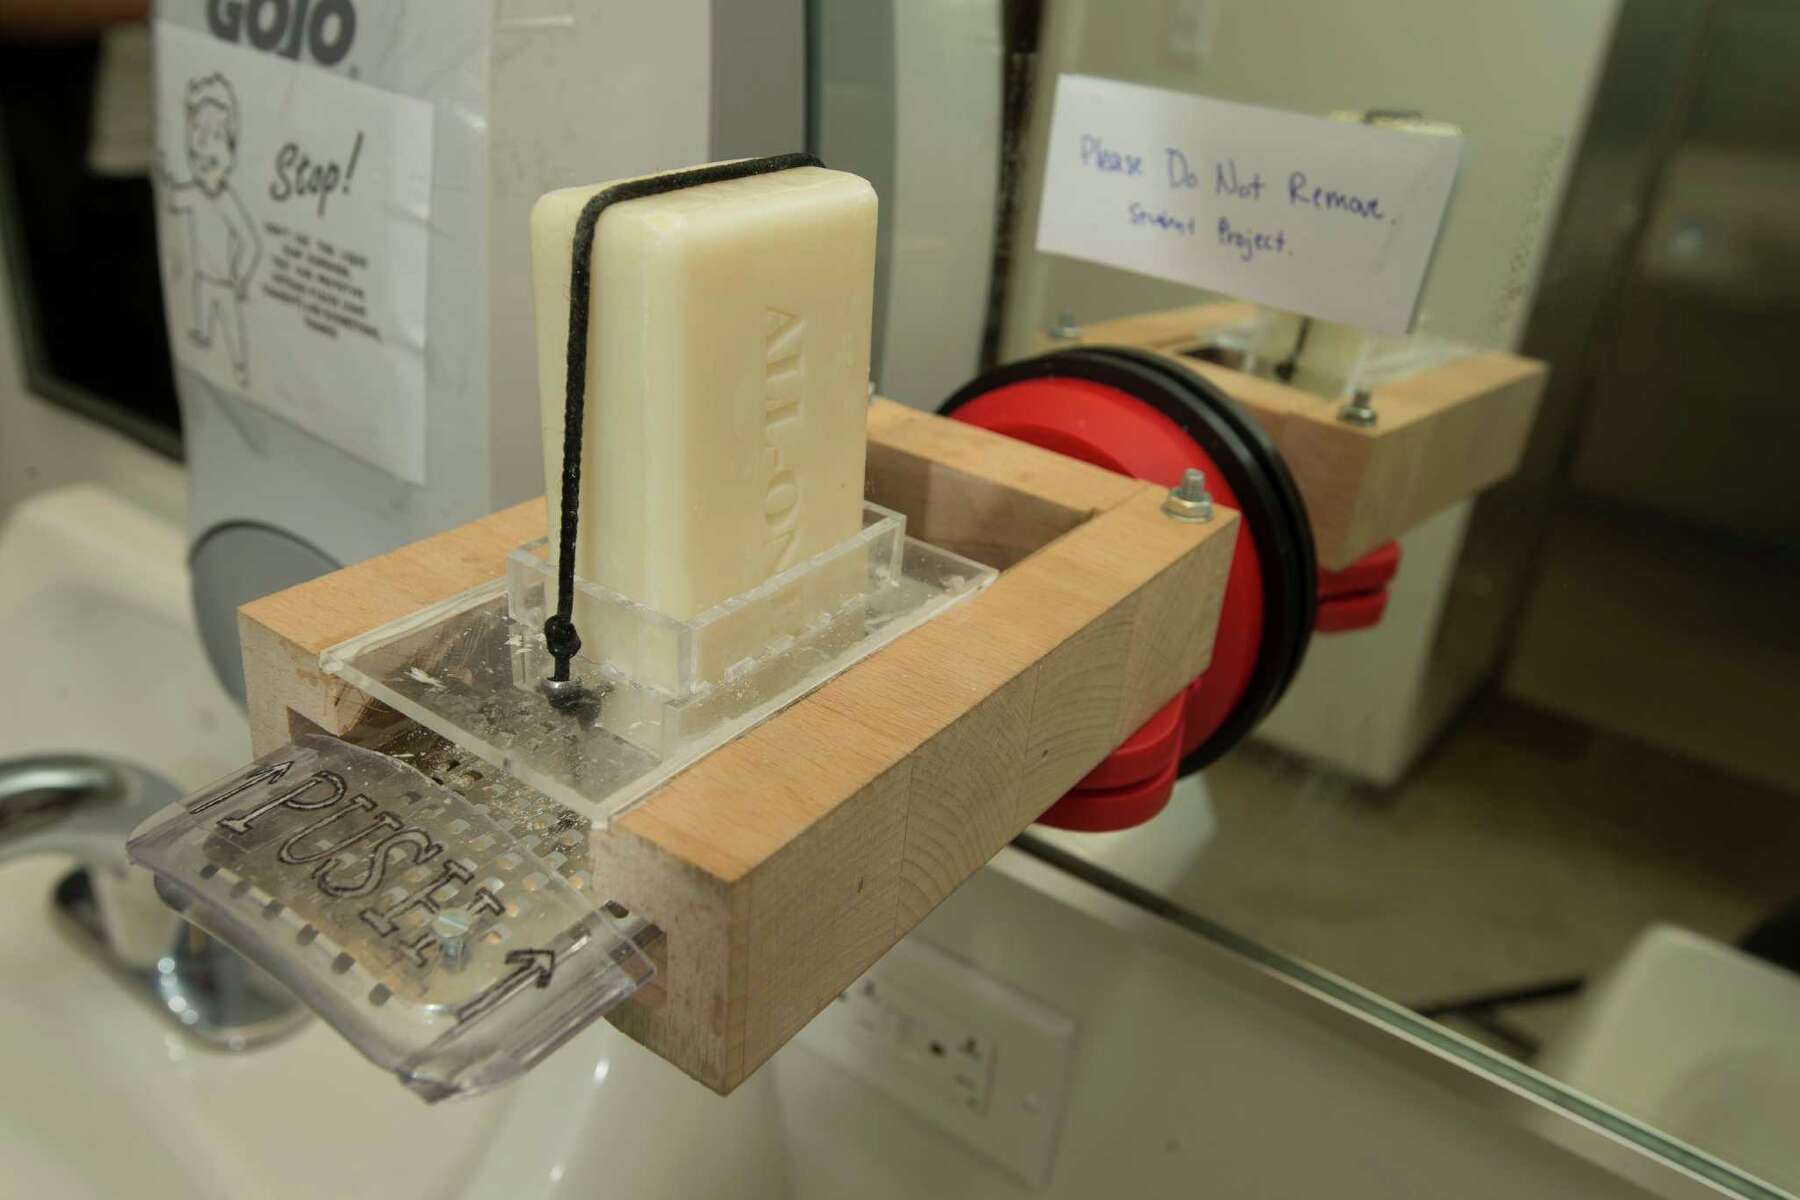 Soap Flakes - Soap Bar Dispensers